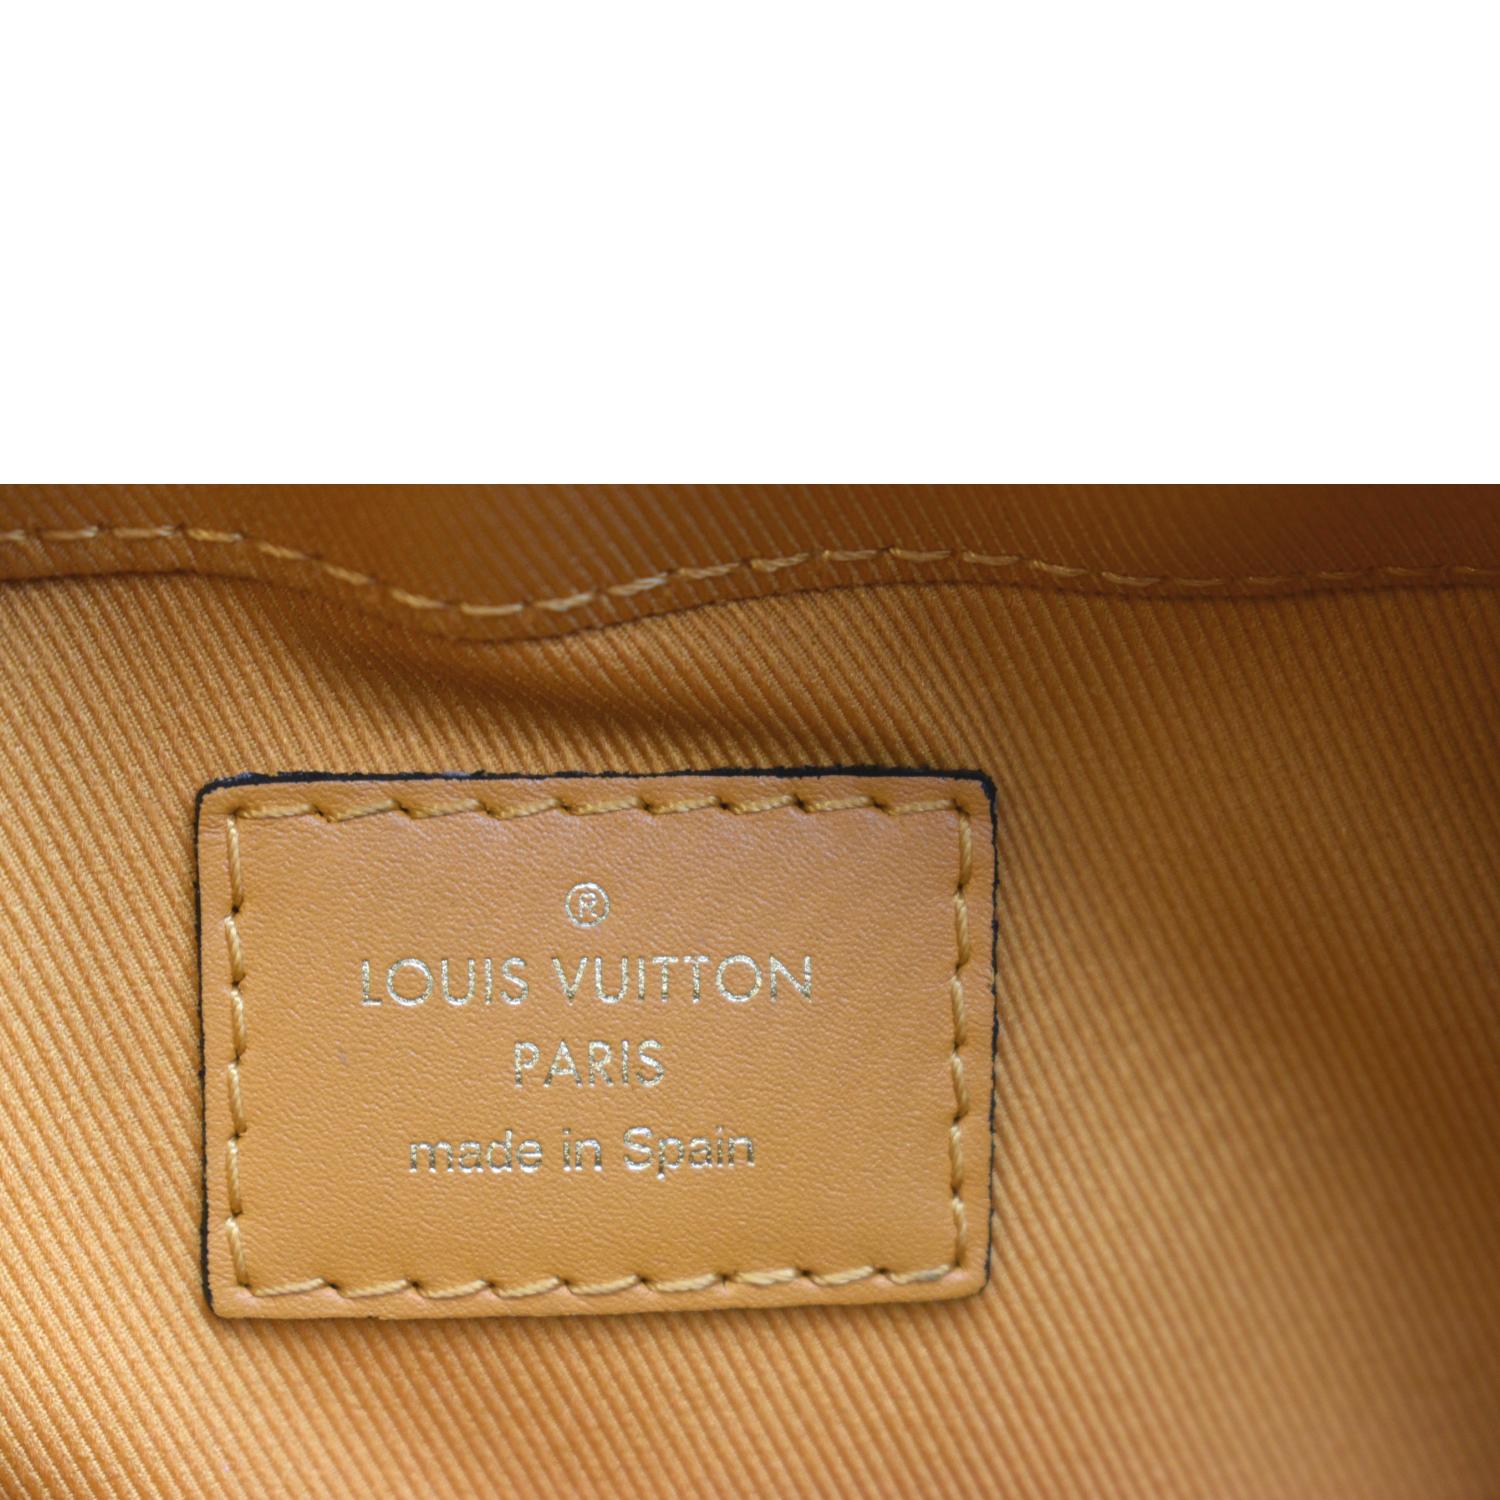 Louis Vuitton Noir Santa Monica Damier Ebene